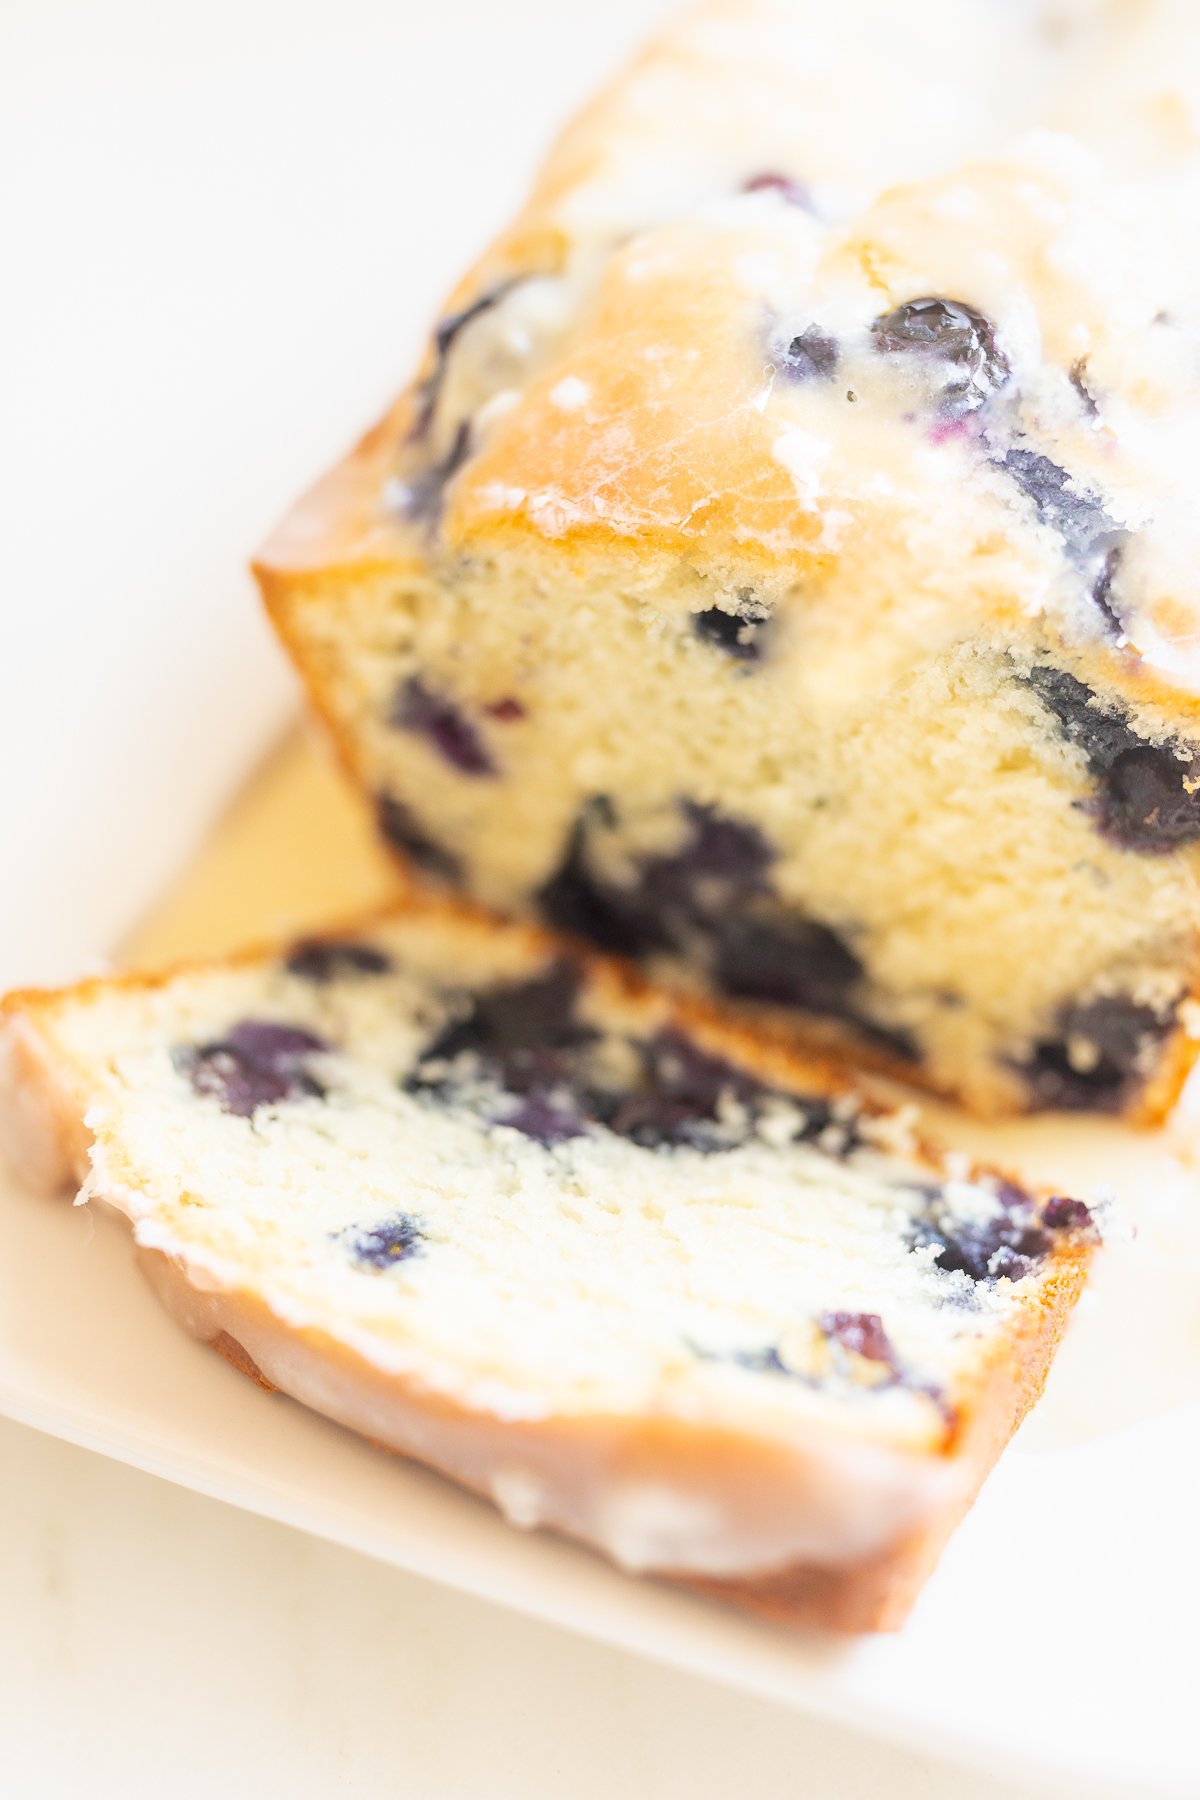 A close-up of a sliced blueberry loaf cake with lemon glaze on a plate.